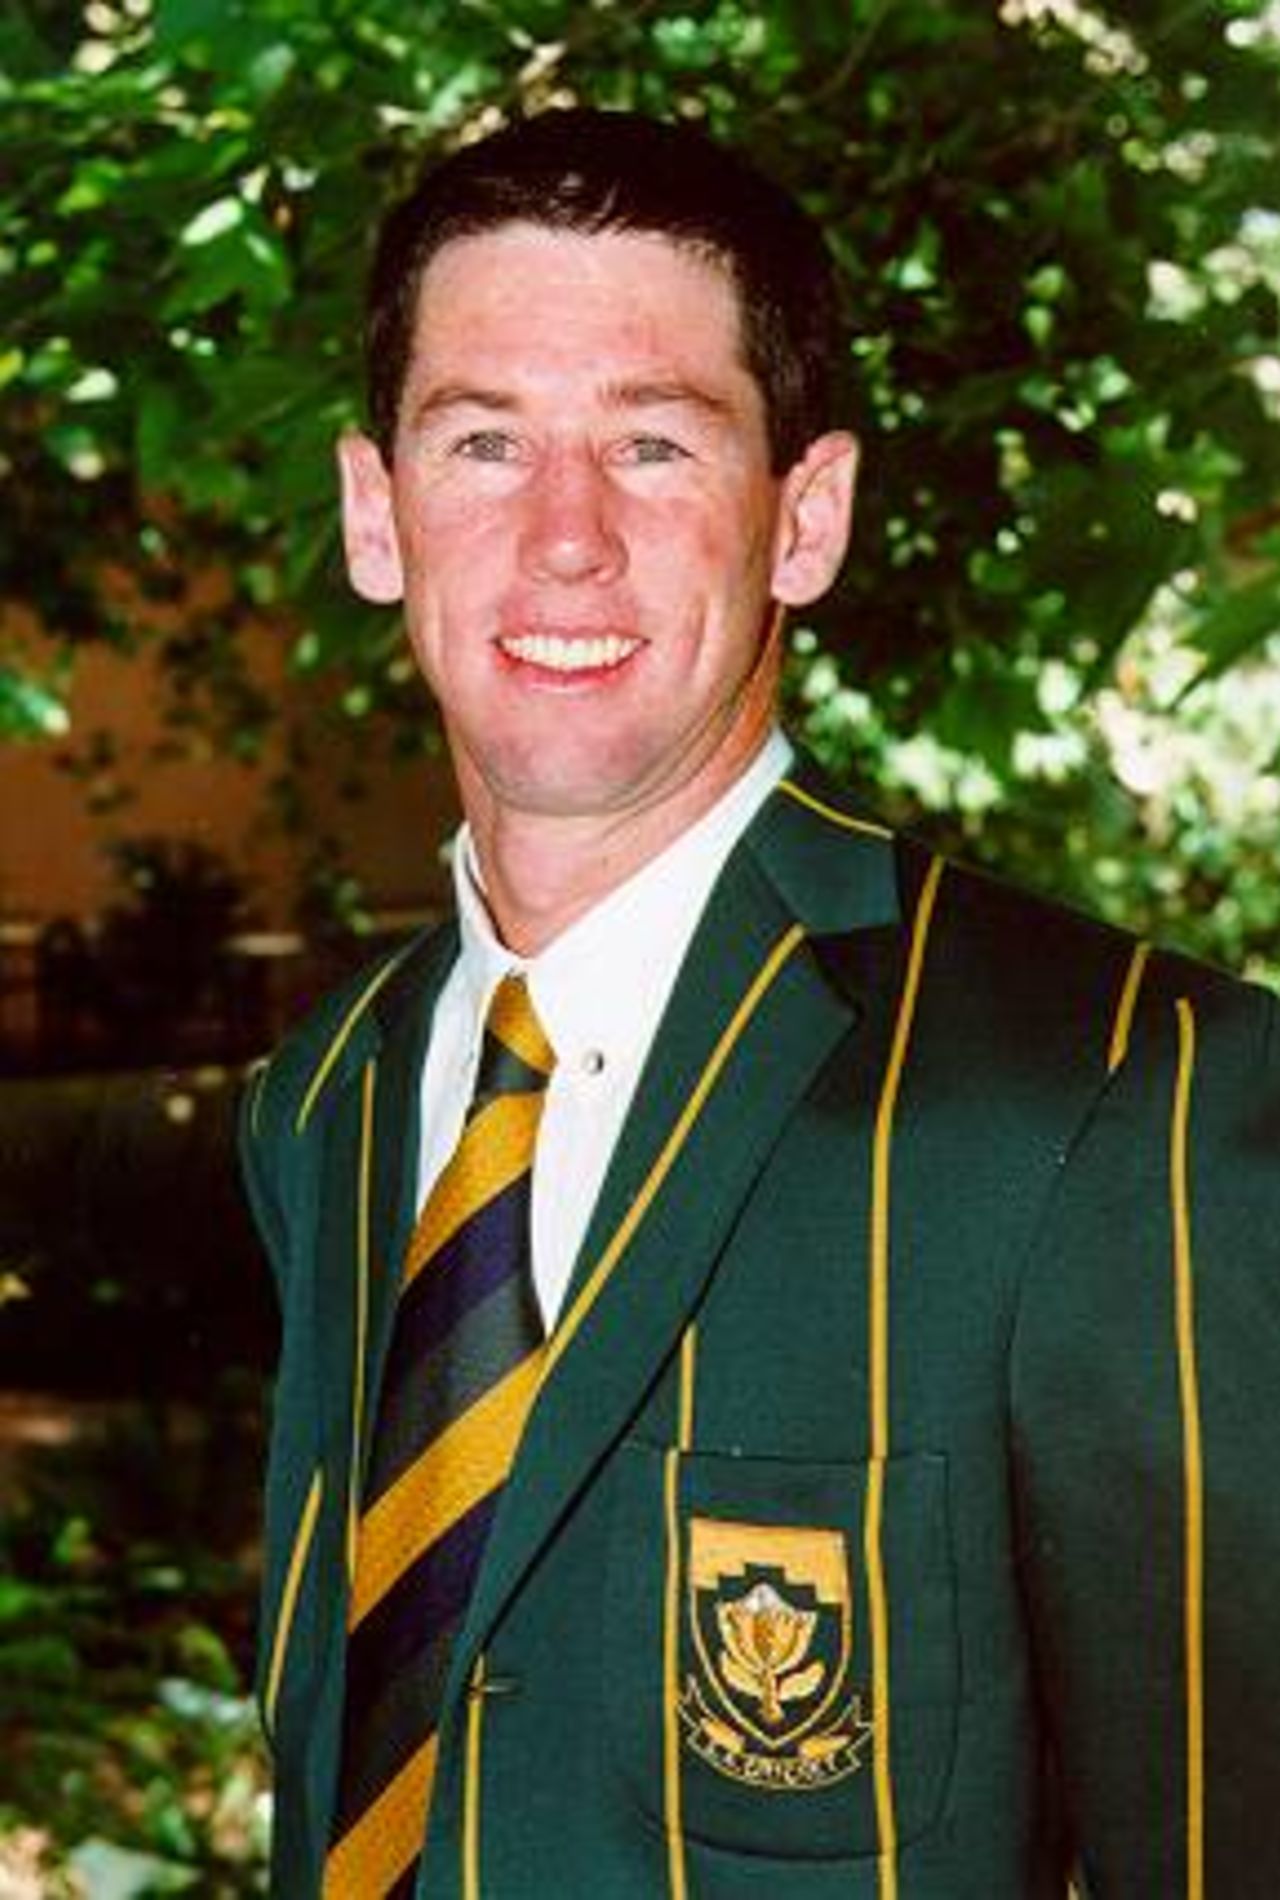 Derek Crookes, South African cricketer